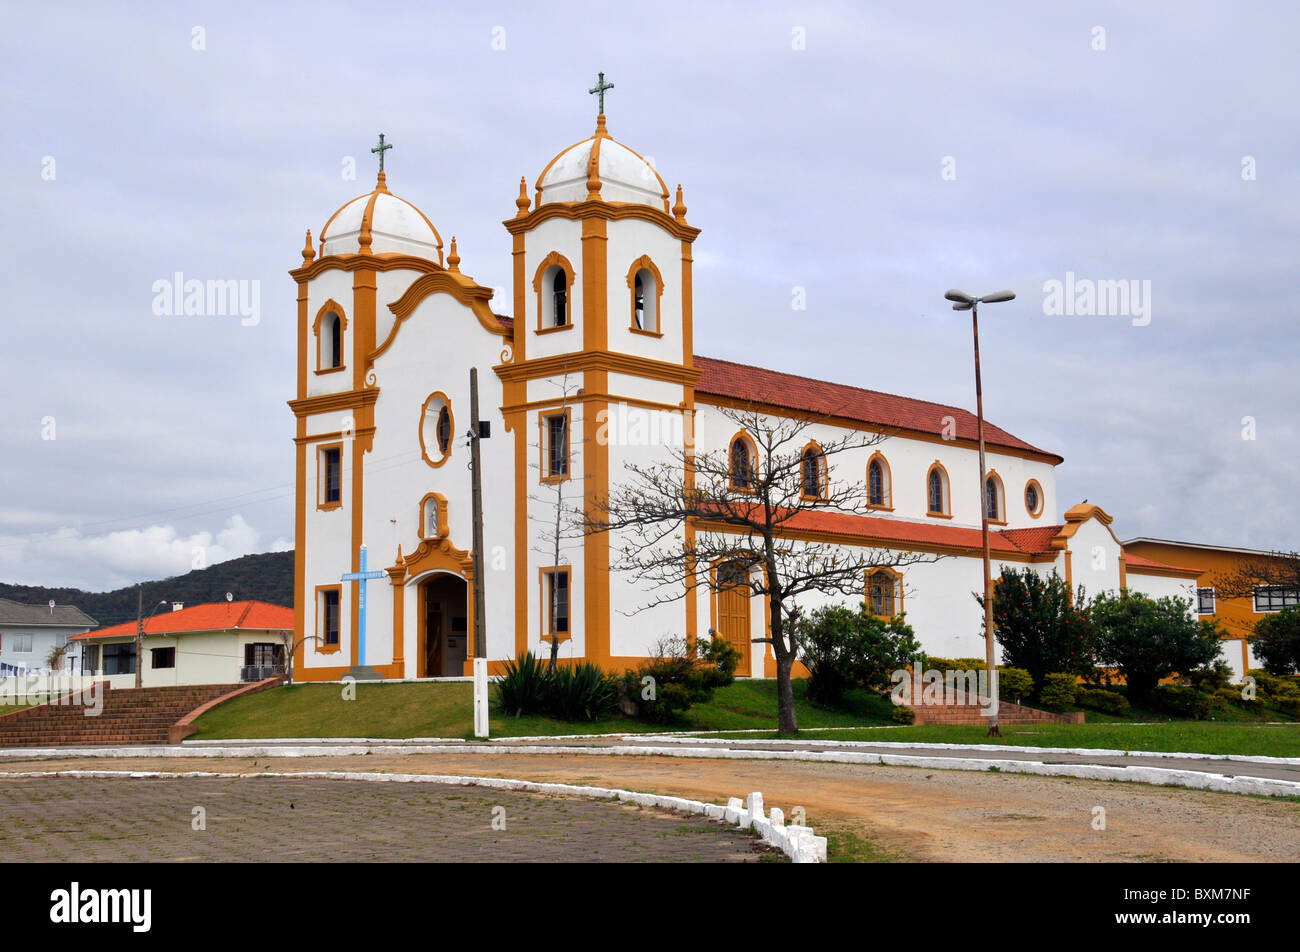 Hauptkirche im portugiesischen Stil - "Igreja Matriz Nossa Senhora da Conceição" - Baujahr 1954, Imbituba, Santa Catarina, Brasilien Stockfoto